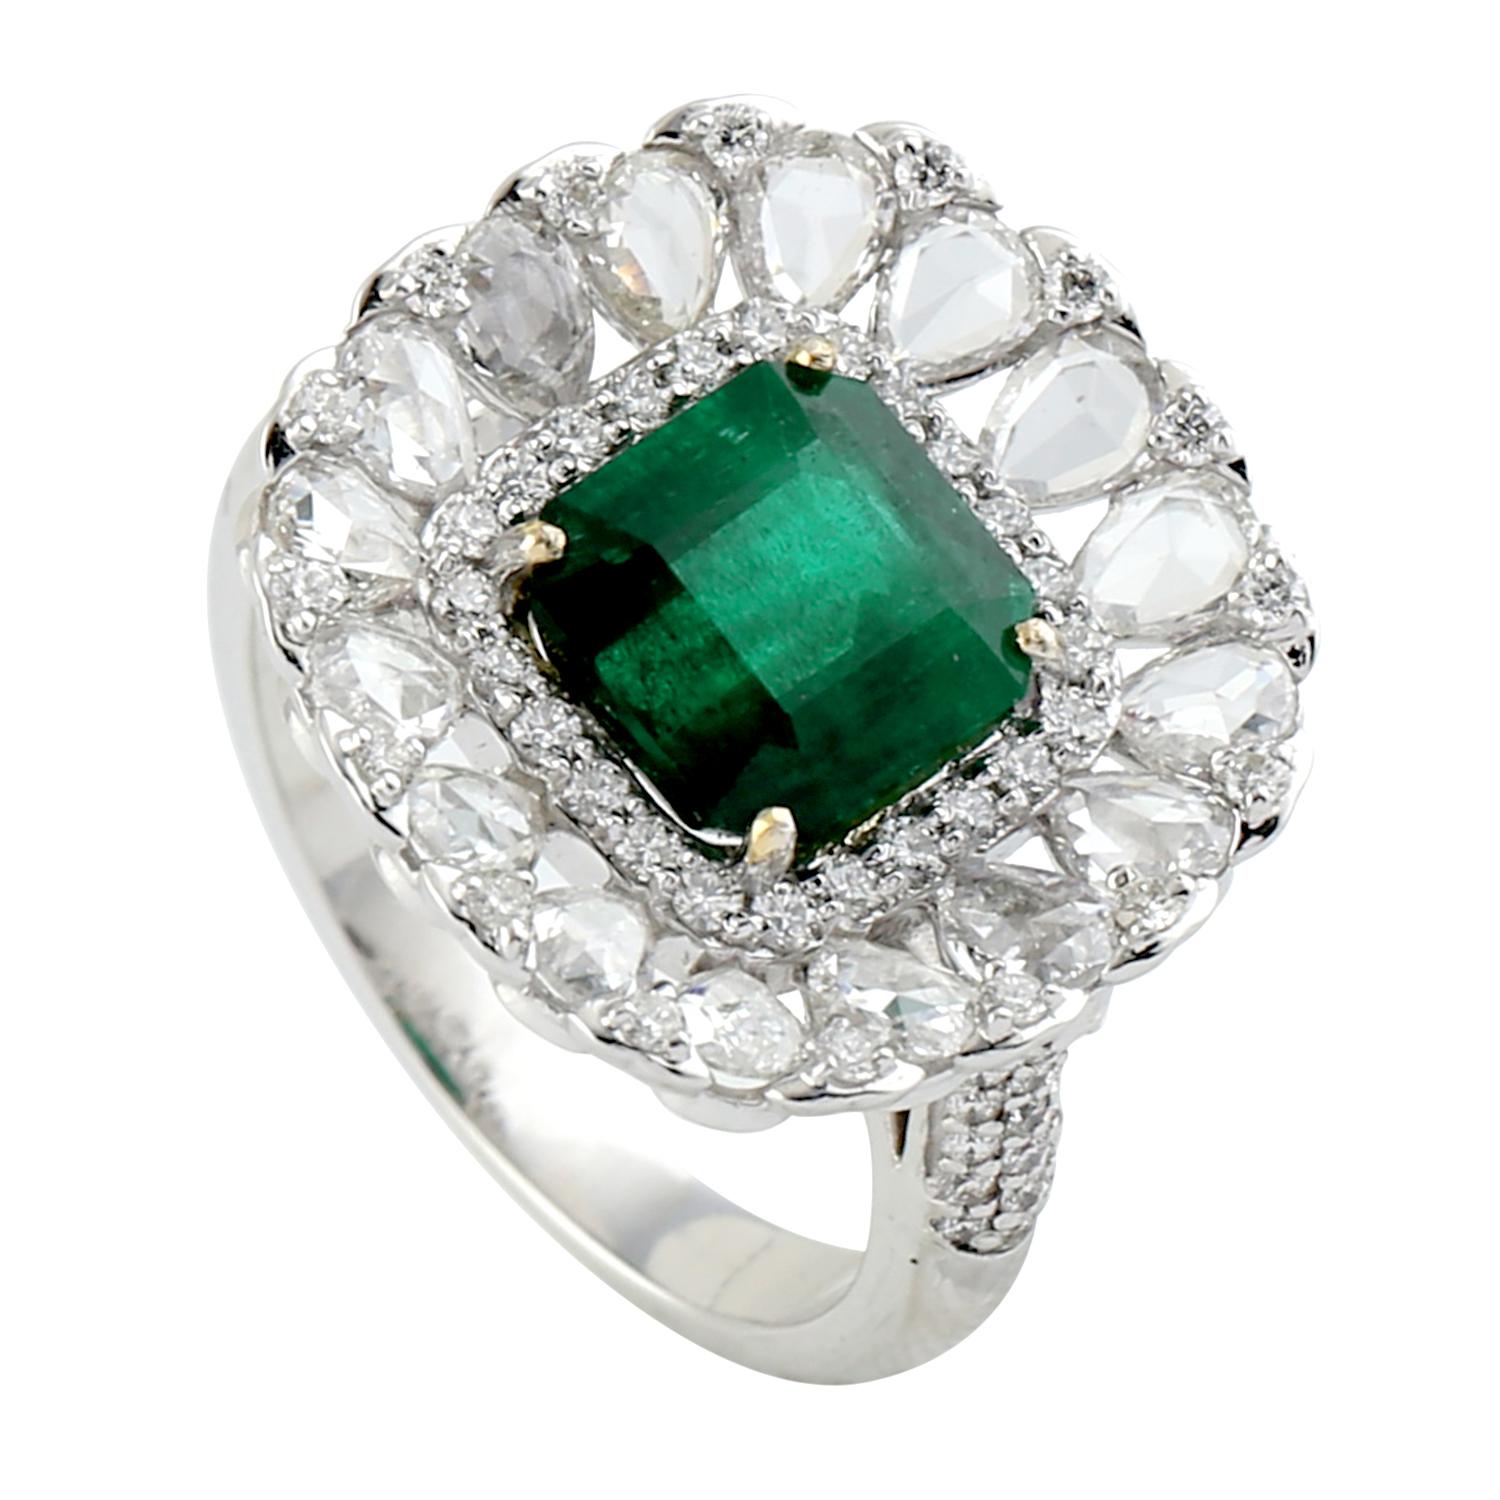 Art Deco Princess Cut Emerald Ring with Diamonds Around in 18K White Gold